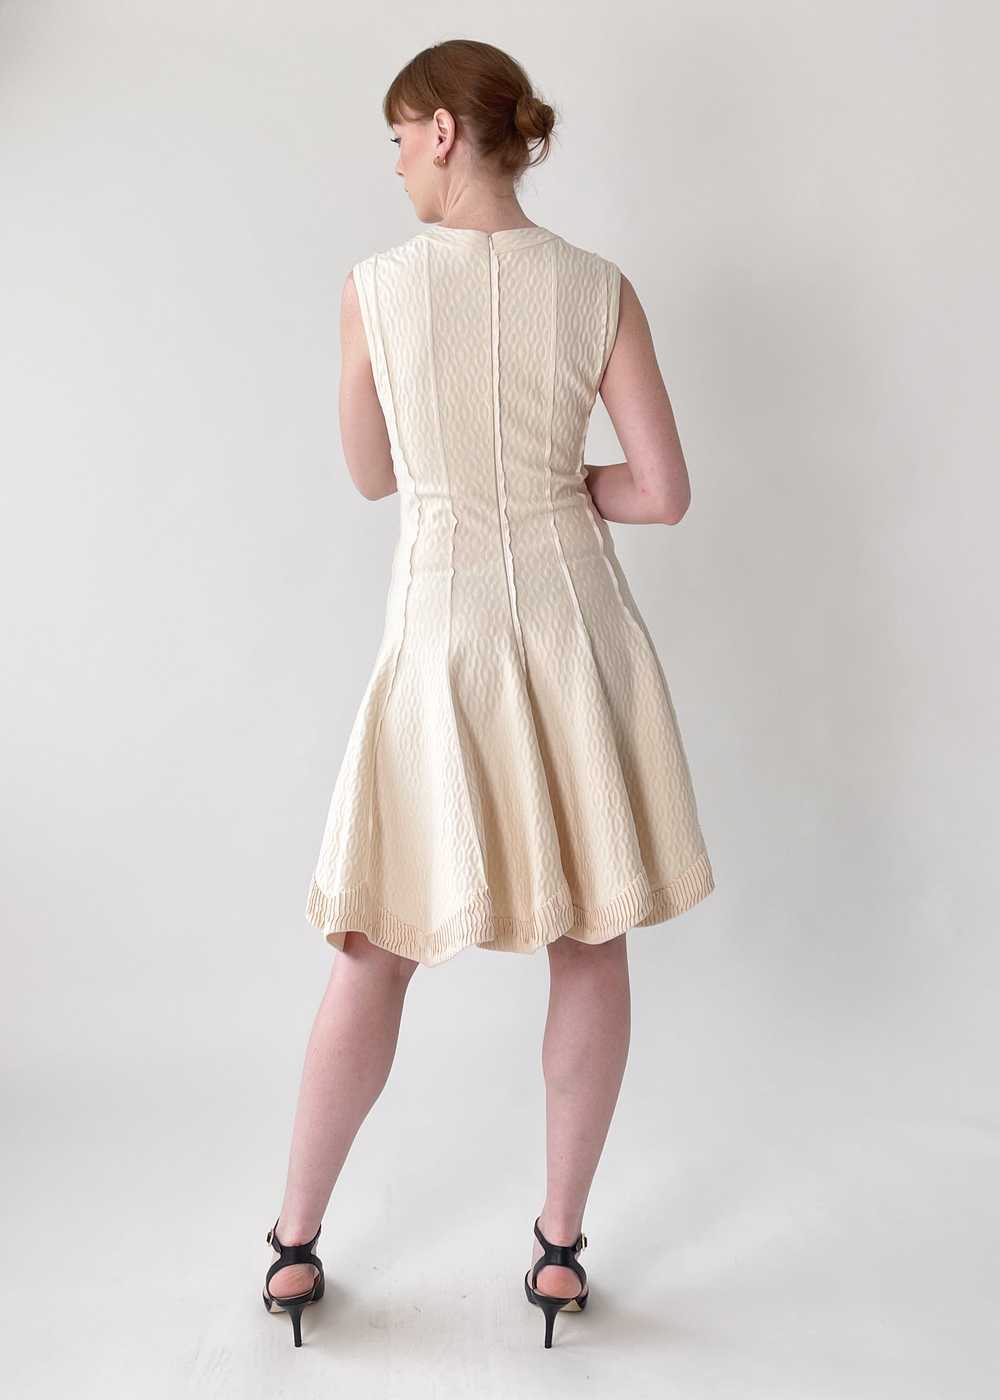 Alaia Textured Knit Dress - image 4